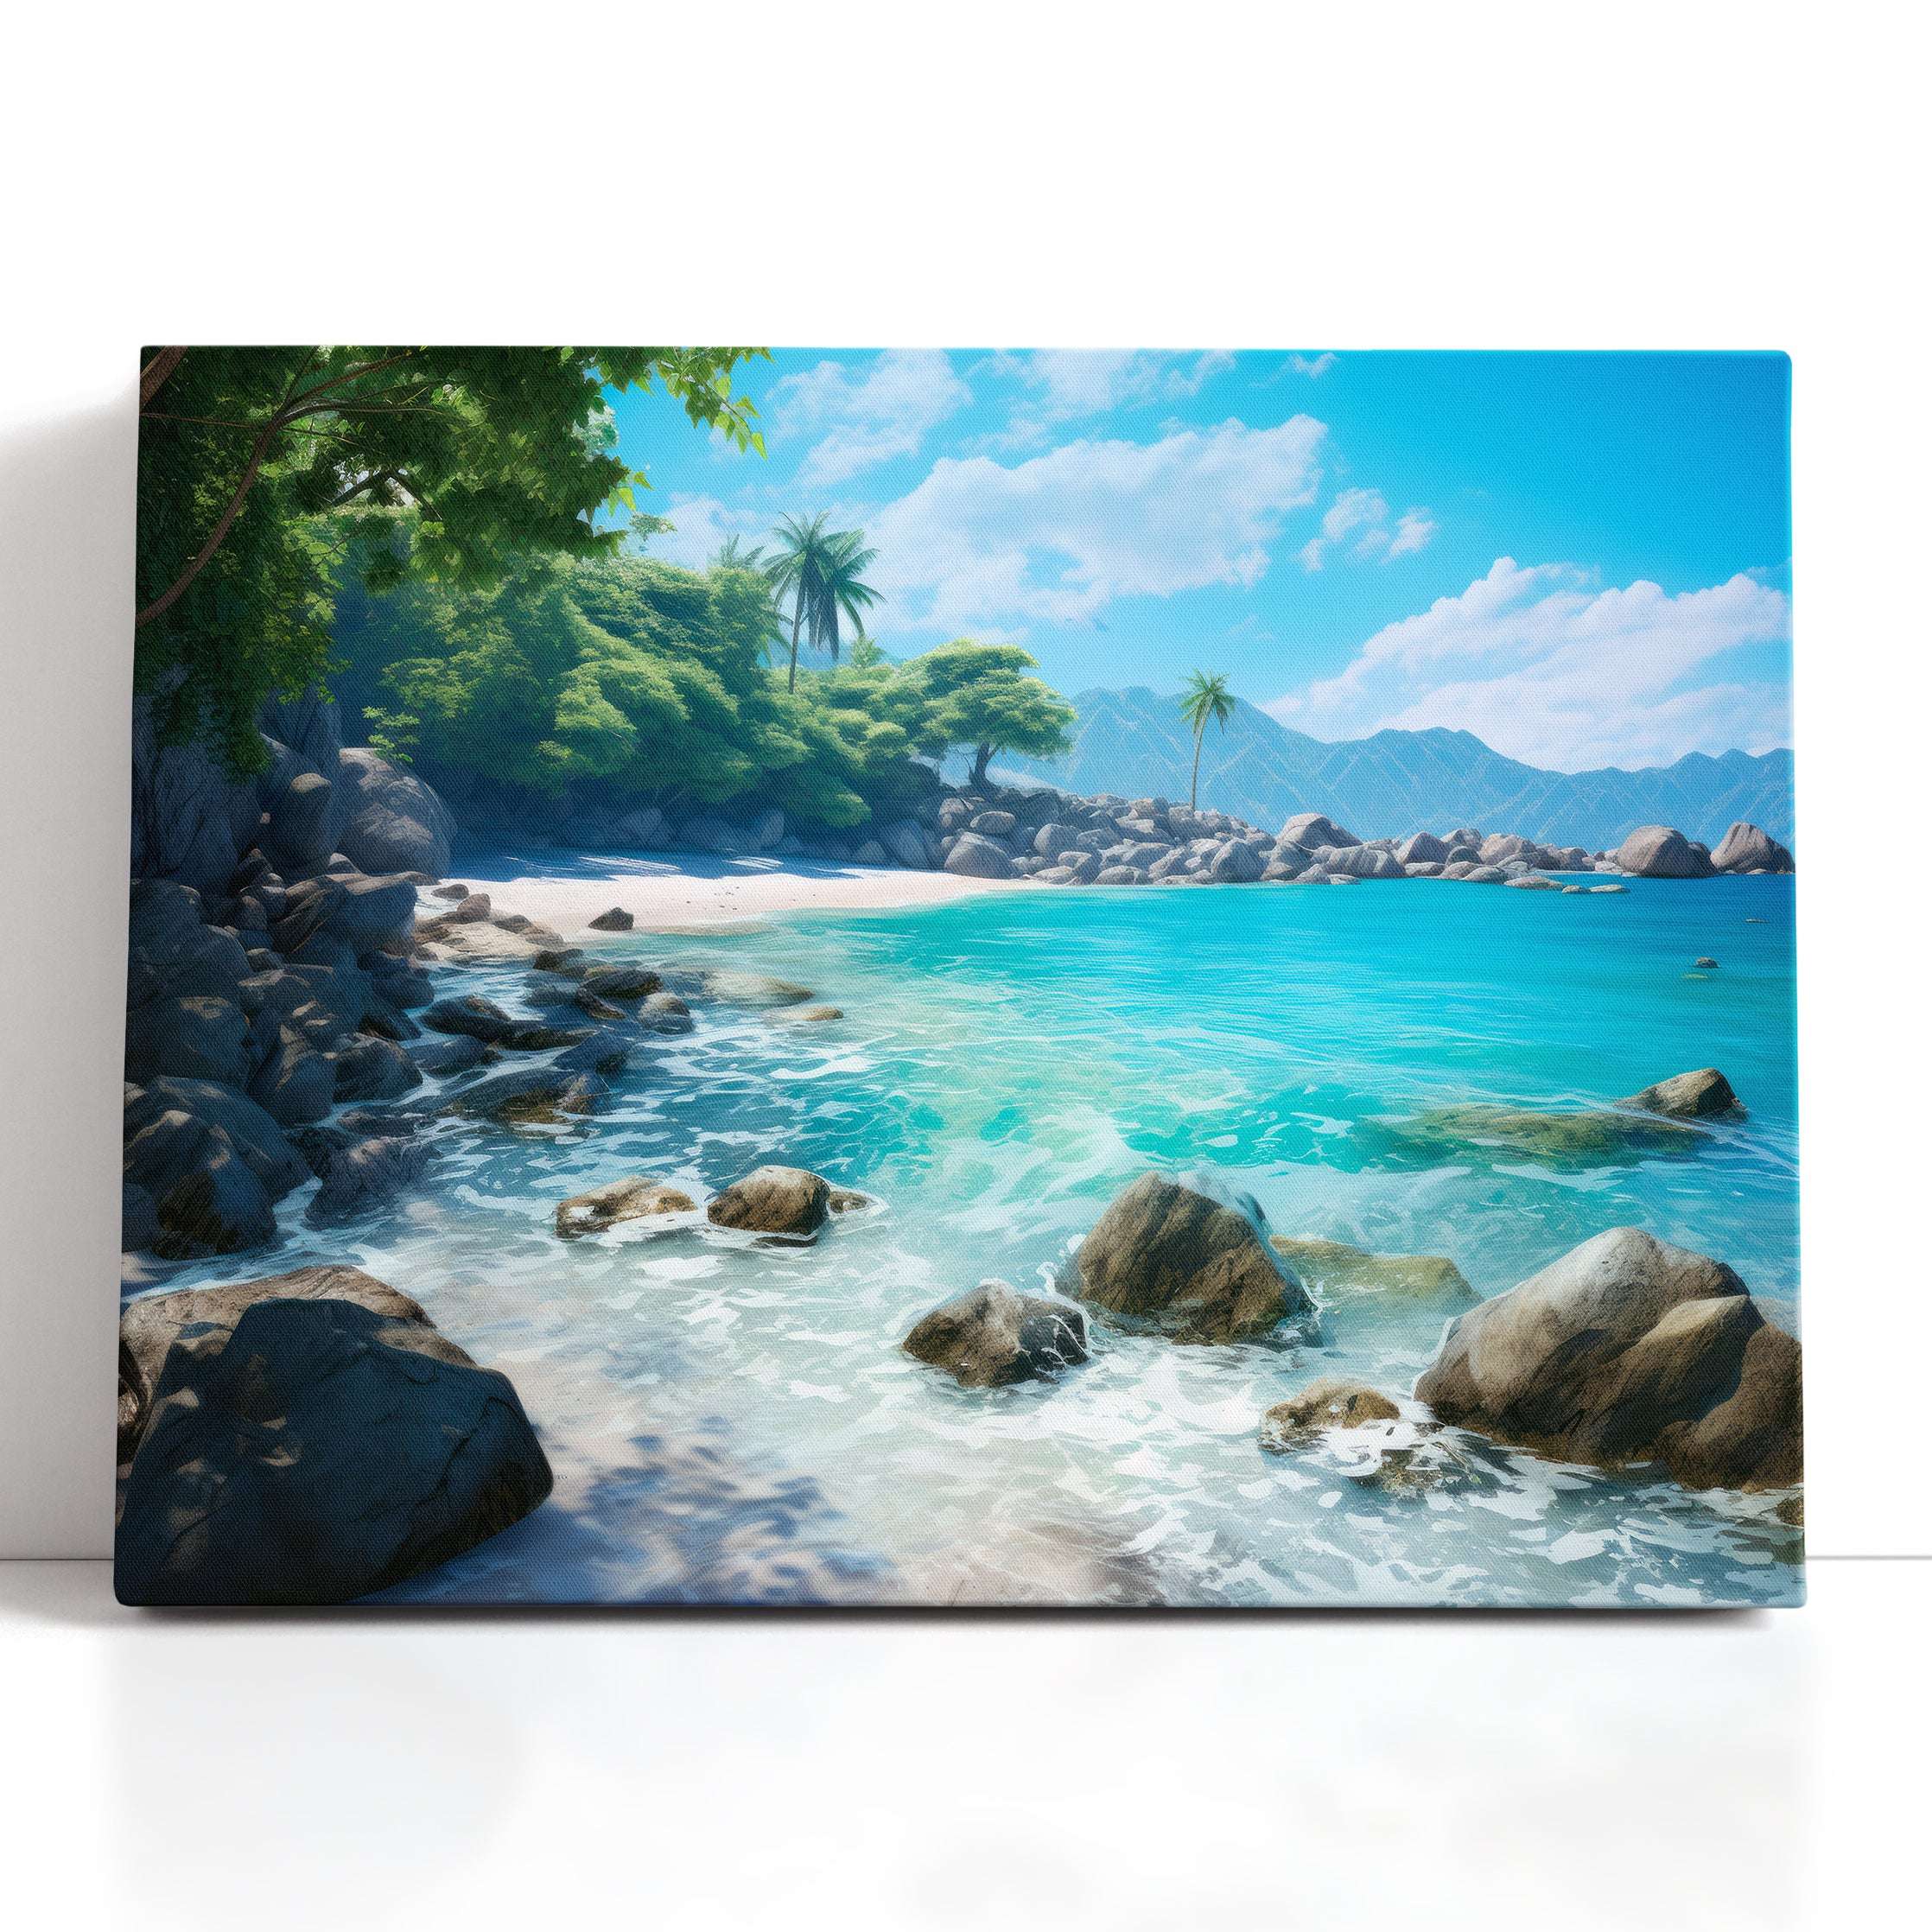 Peaceful Scenery of a Rocky Beach - Canvas Print - Artoholica Ready to Hang Canvas Print